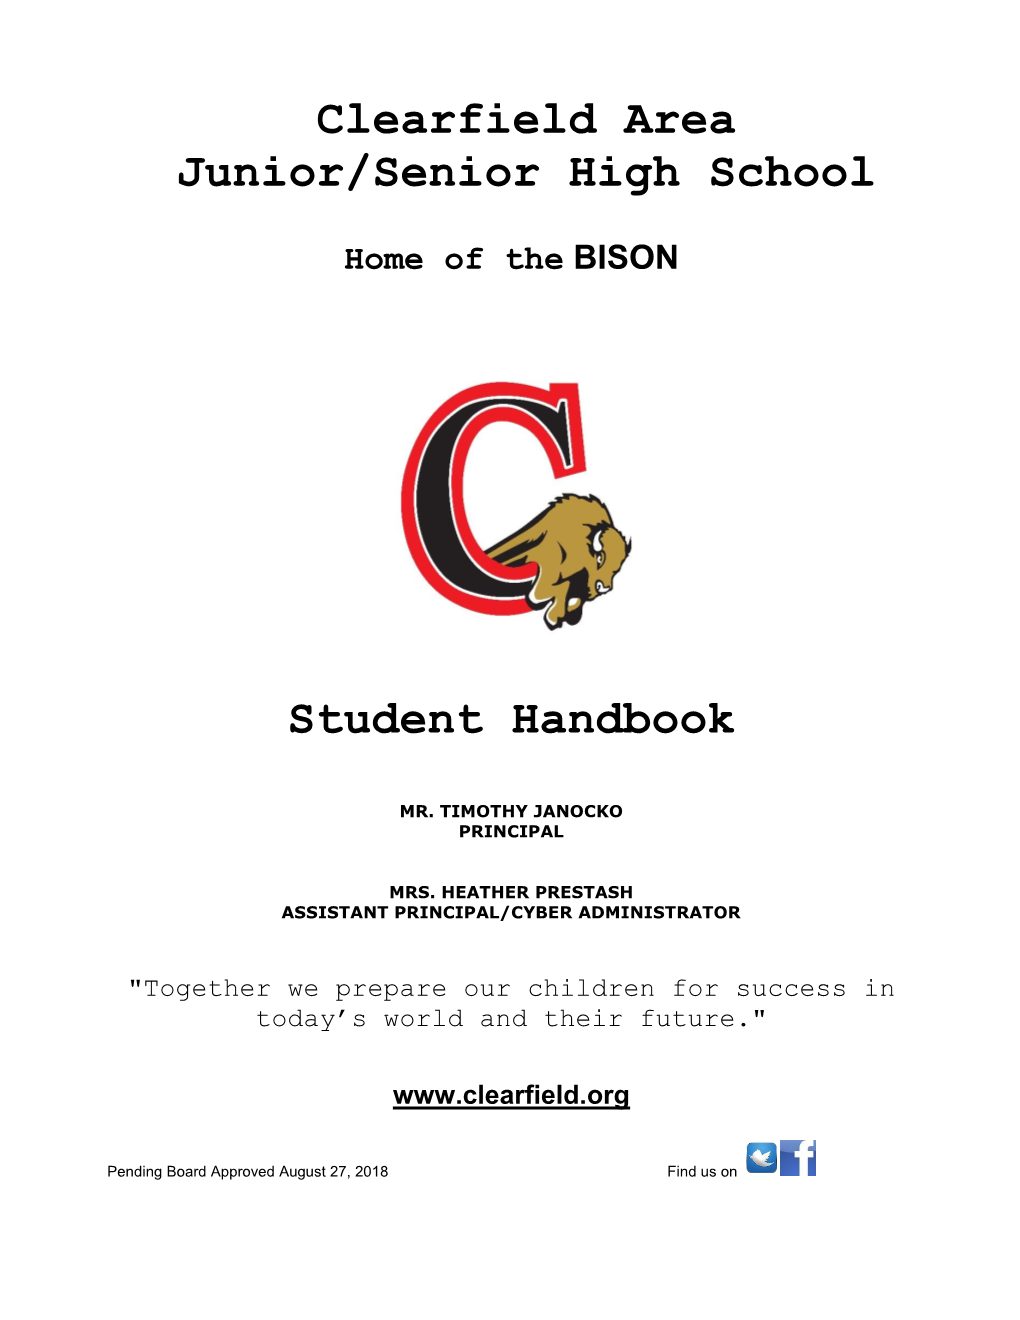 Clearfield Area Junior/Senior High School Student Handbook